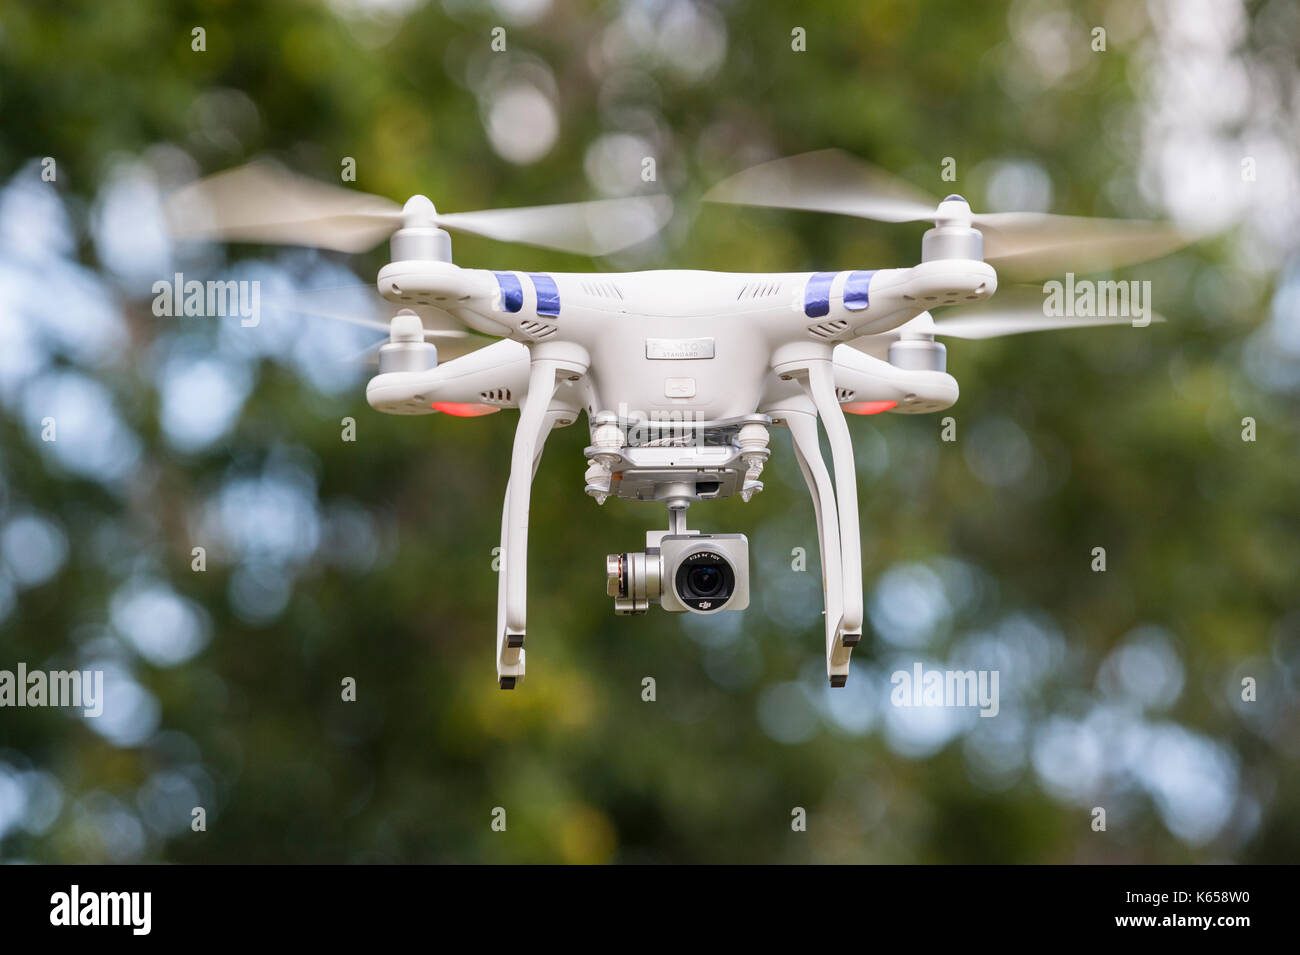 A Phantom drone showing on board camera Stock Photo